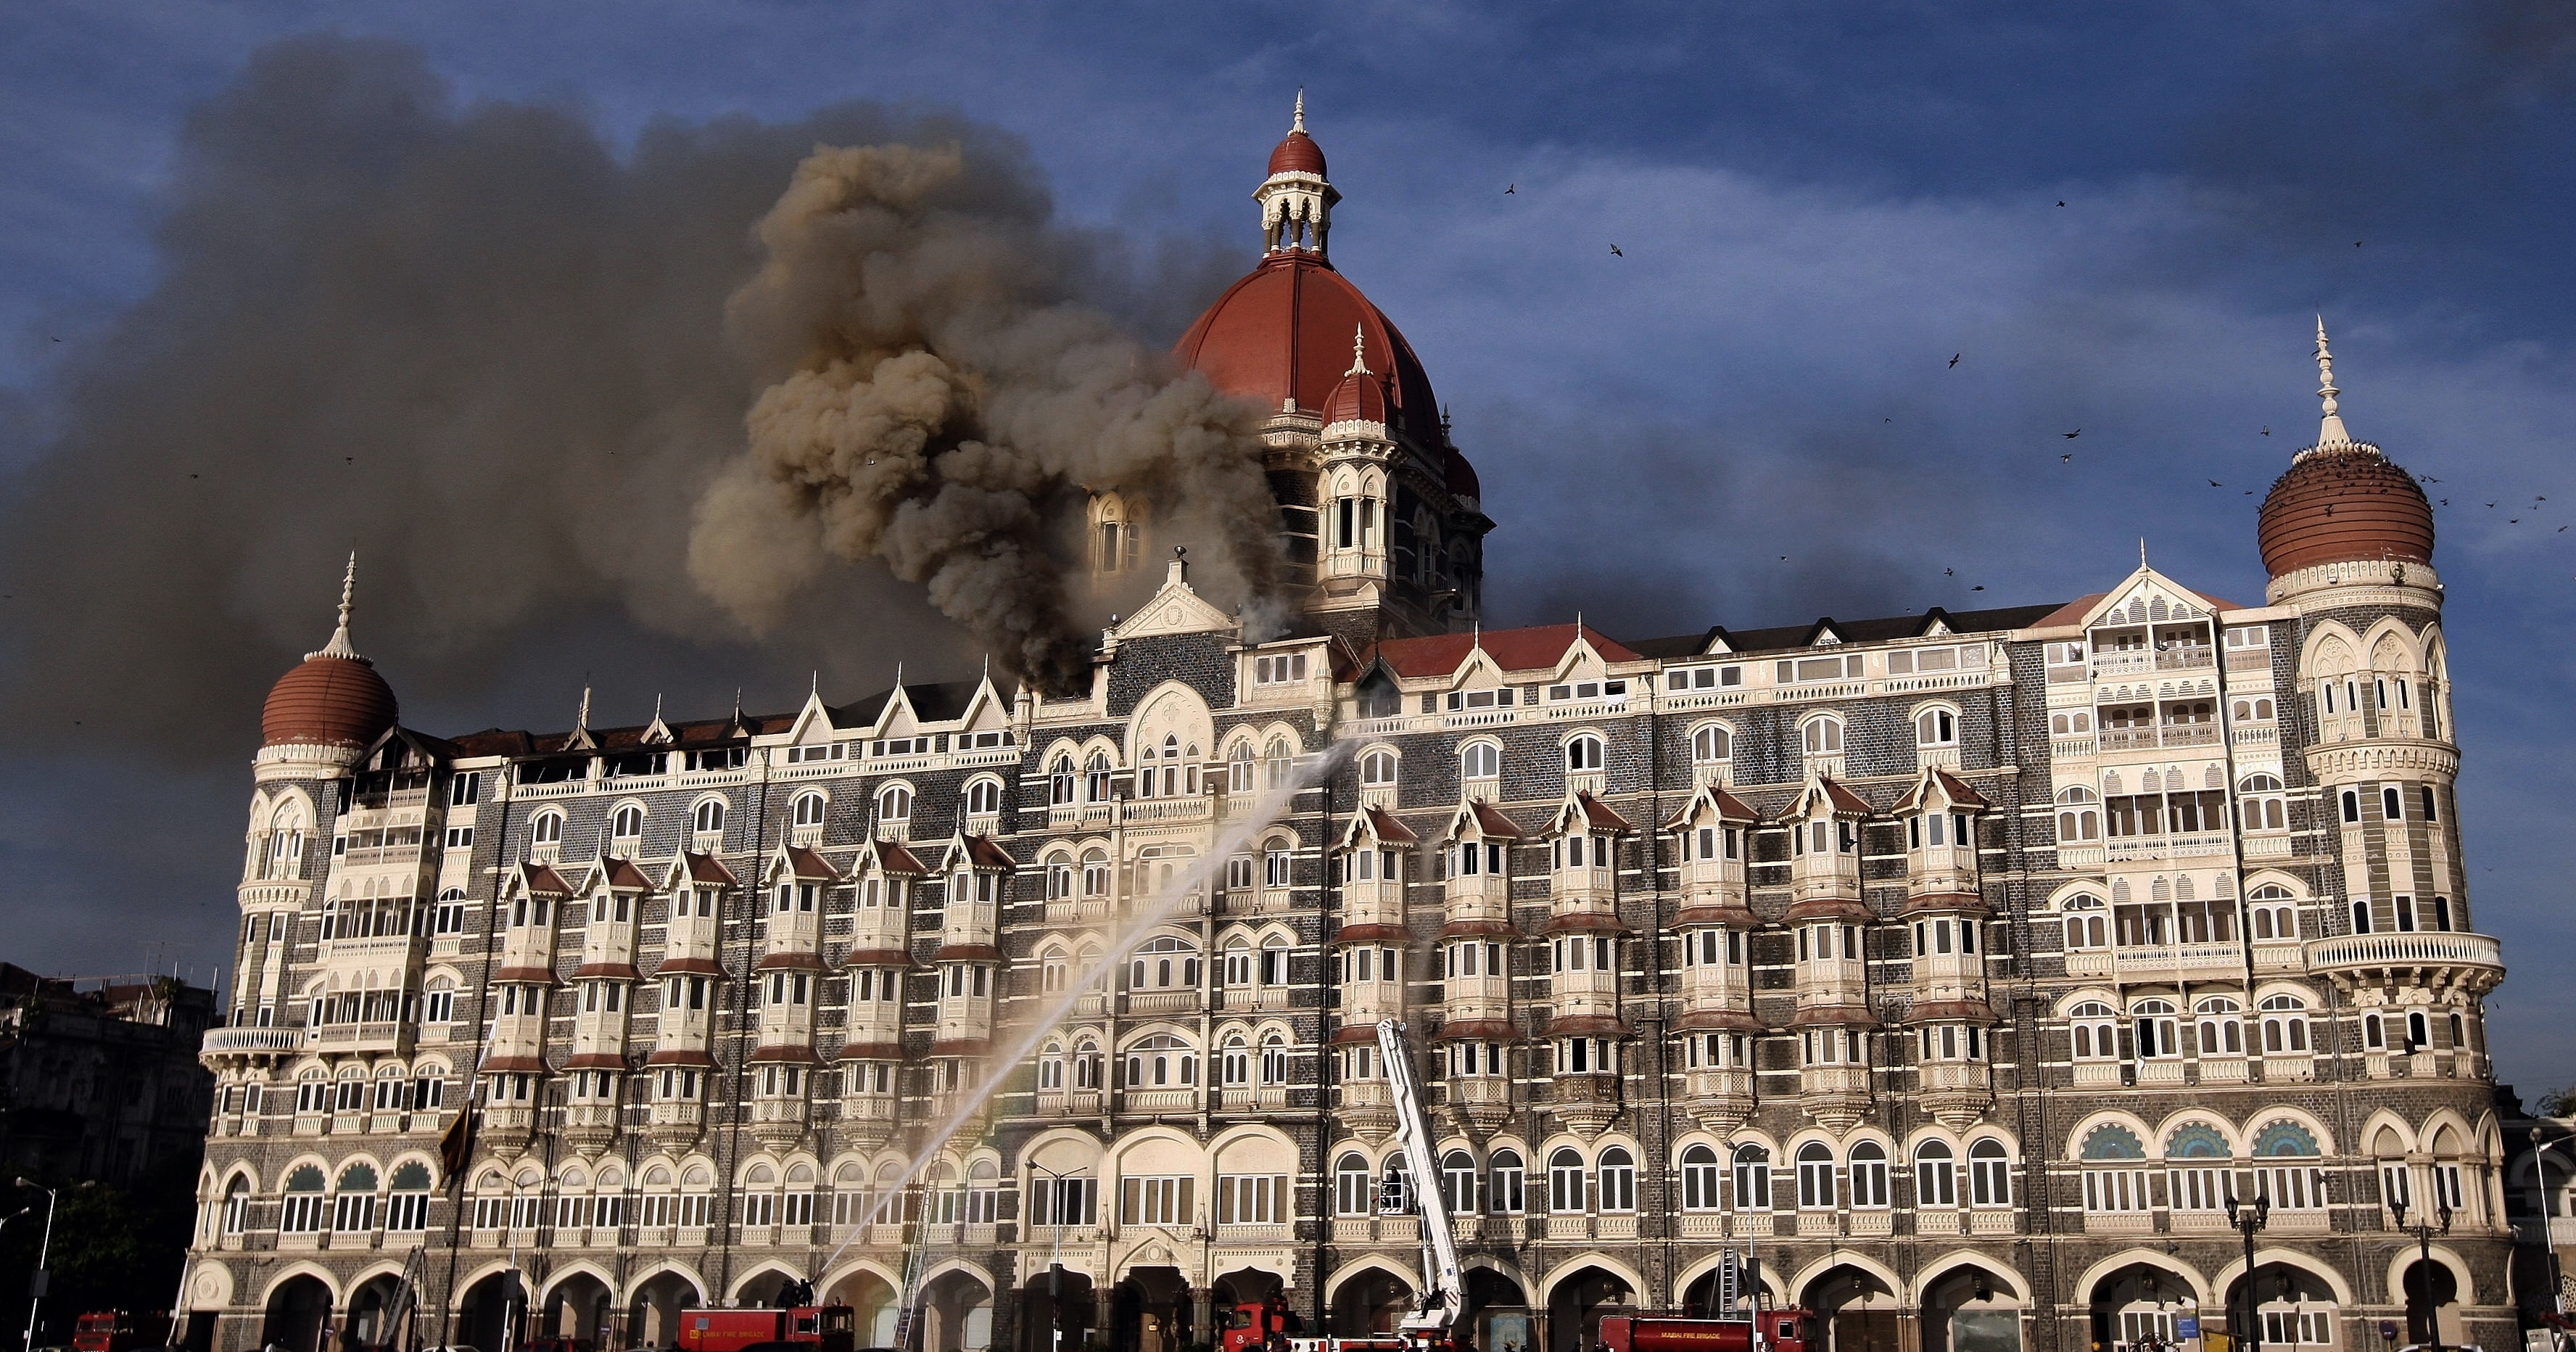 Нападение на отели. Отель Тадж в Мумбаи. Мумбаи 2008 Тадж Махал теракт. Гостиница Тадж Махал в Мумбаи. Отель Тадж Махал 2008 теракт.